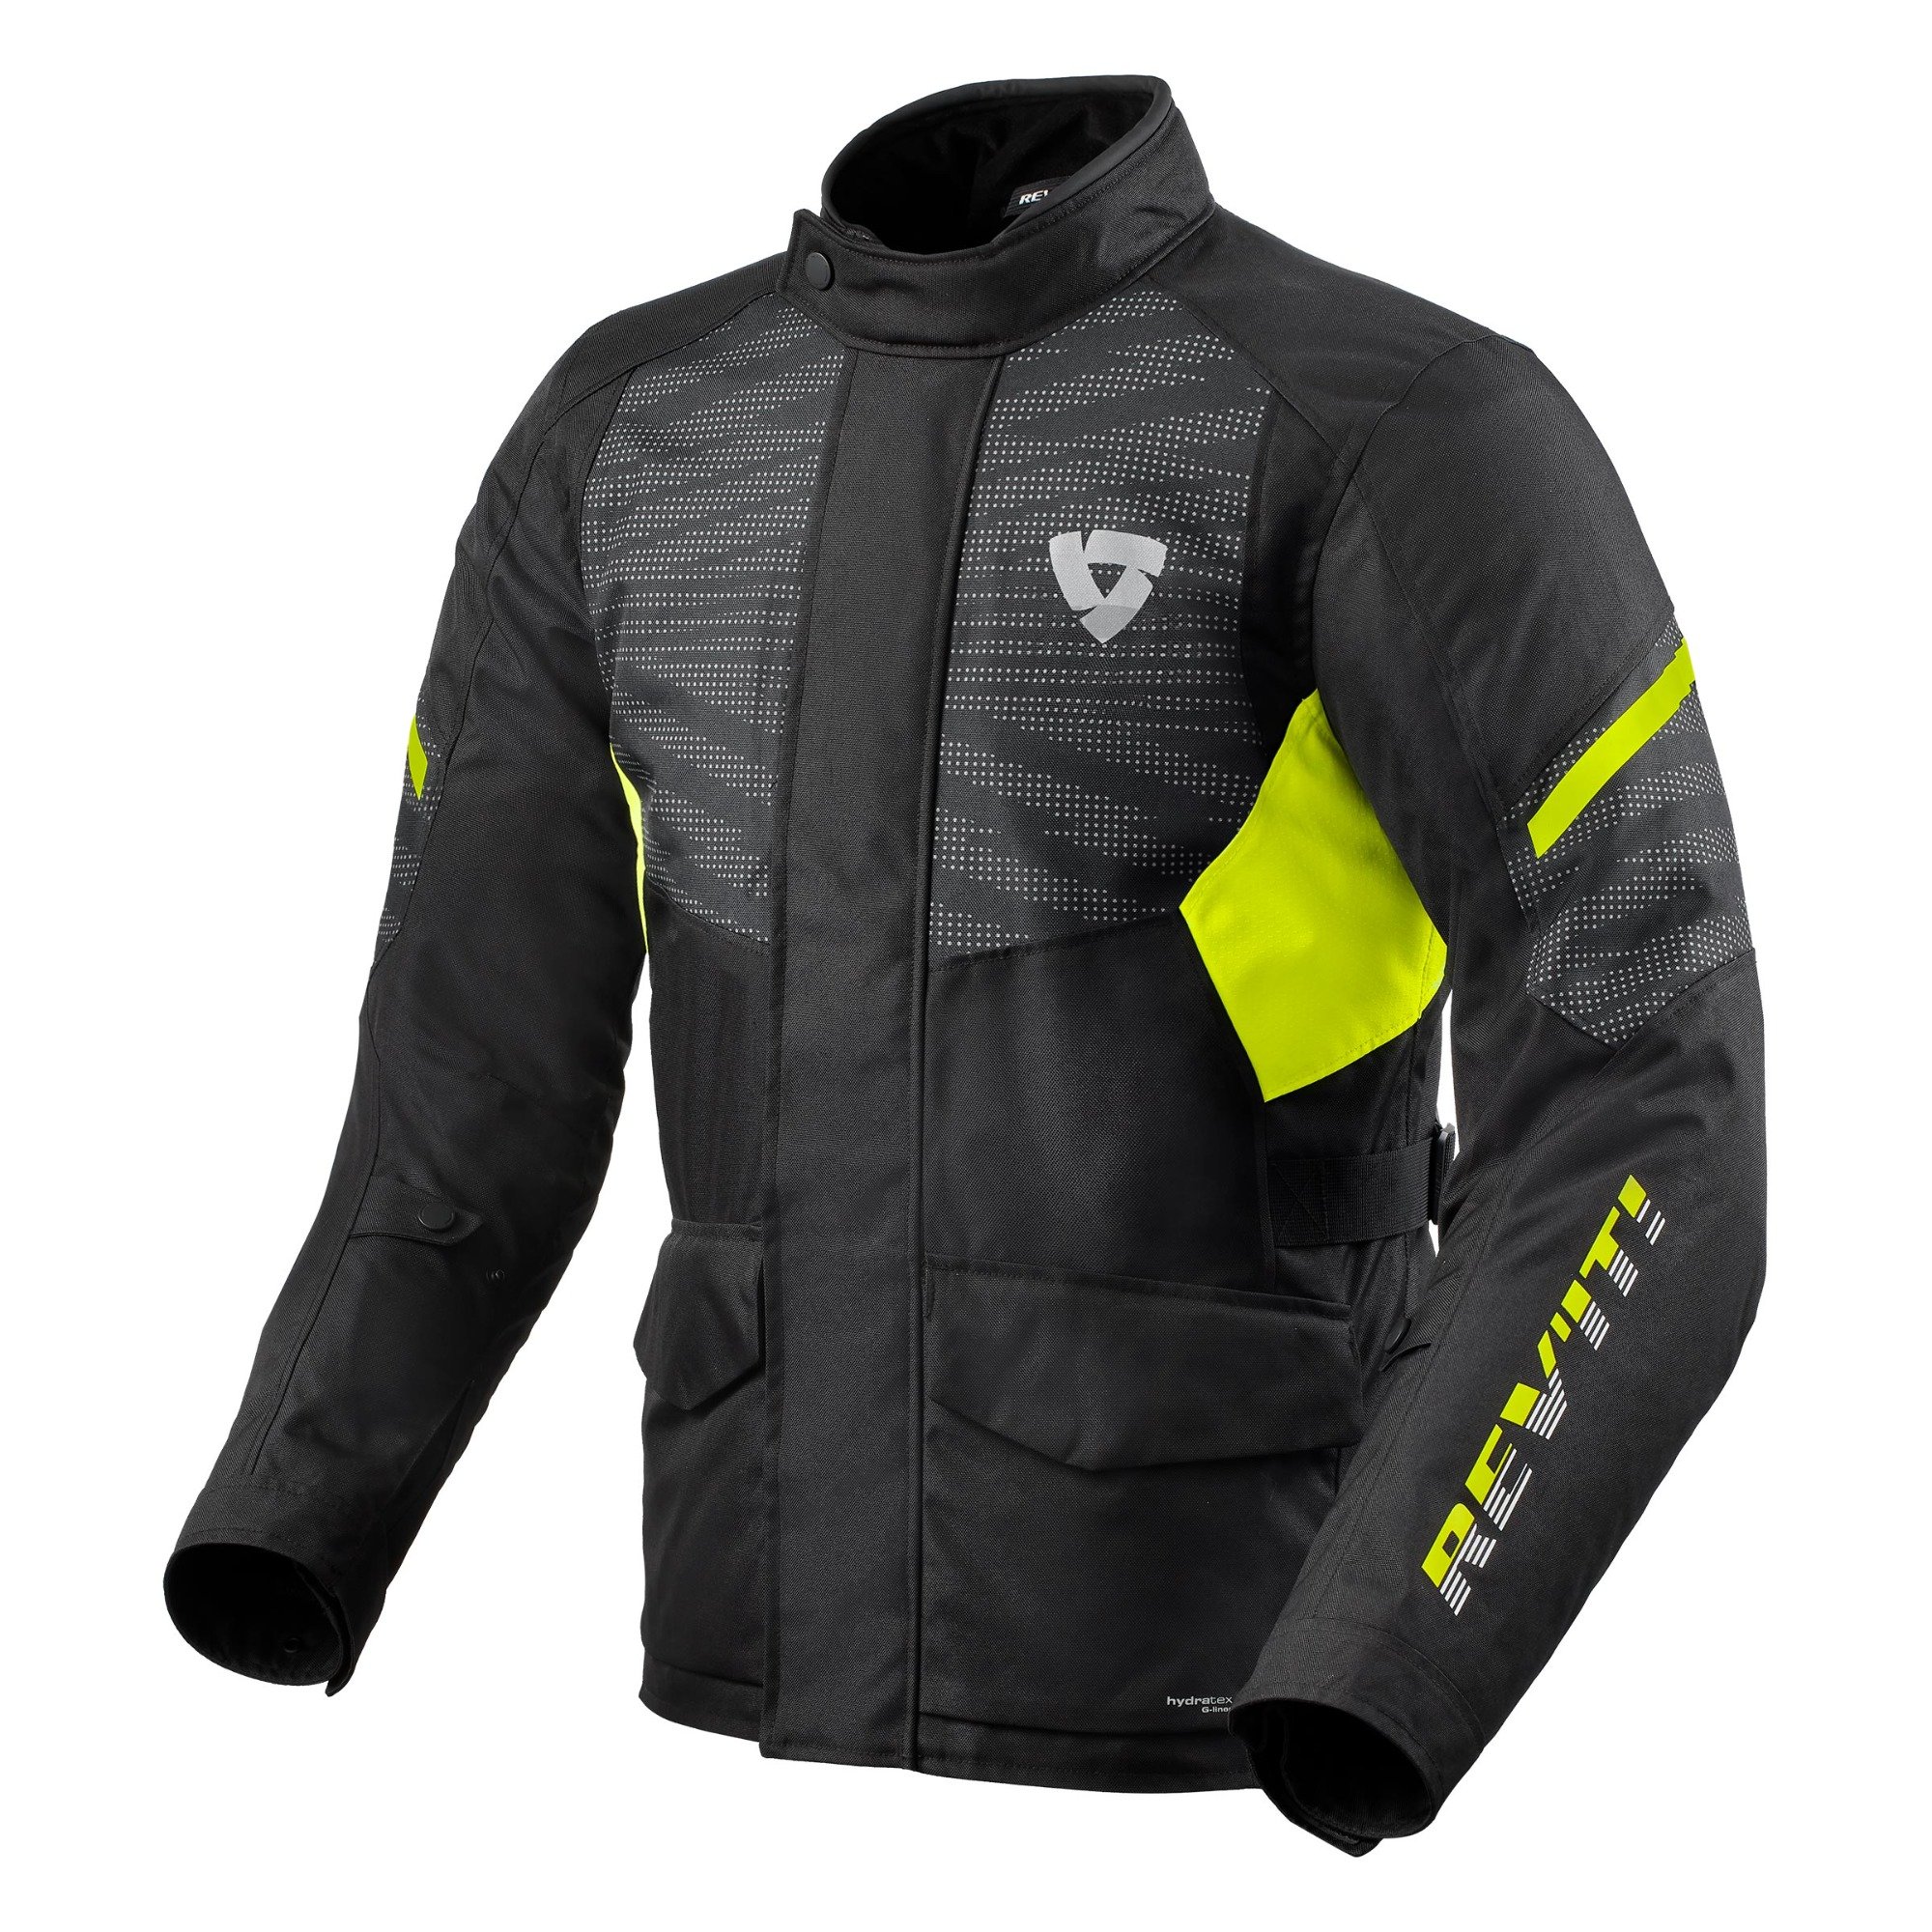 Image of REV'IT! Duke H2O Jacket Black Neon Yellow Size 4XL ID 8700001332170